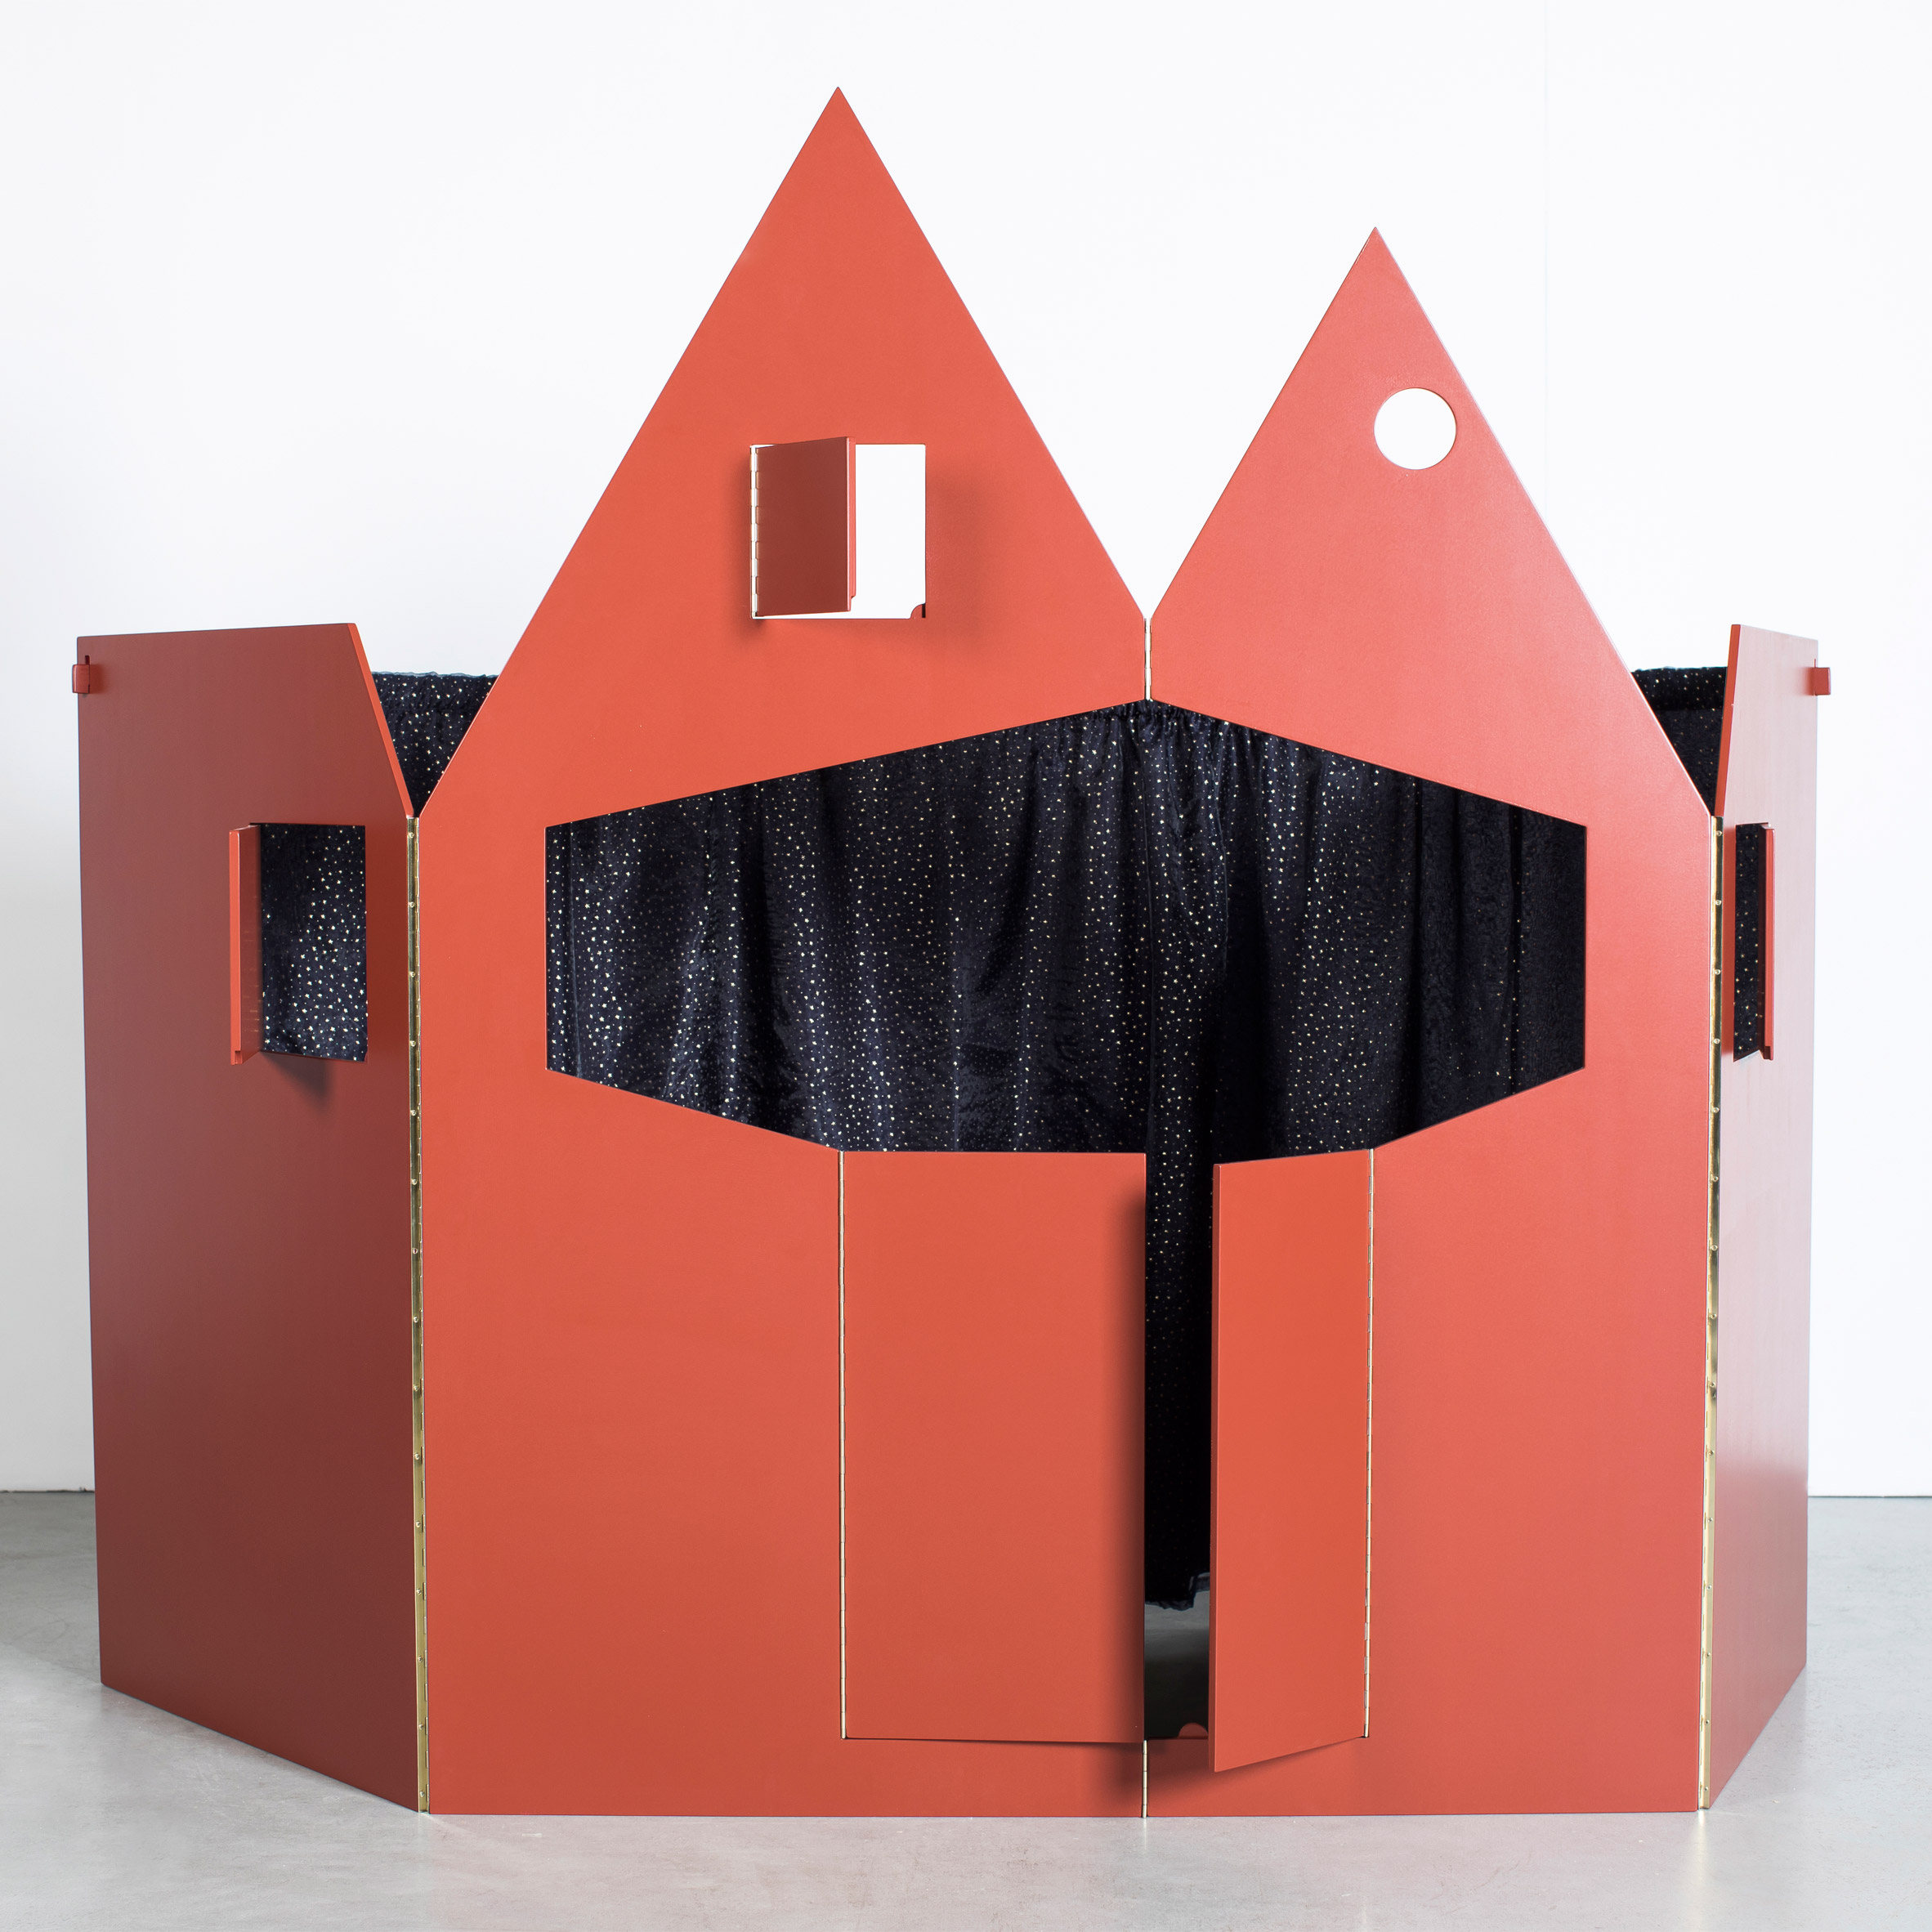 IMM: Puppet Theatre by Robbrecht en Daem architects